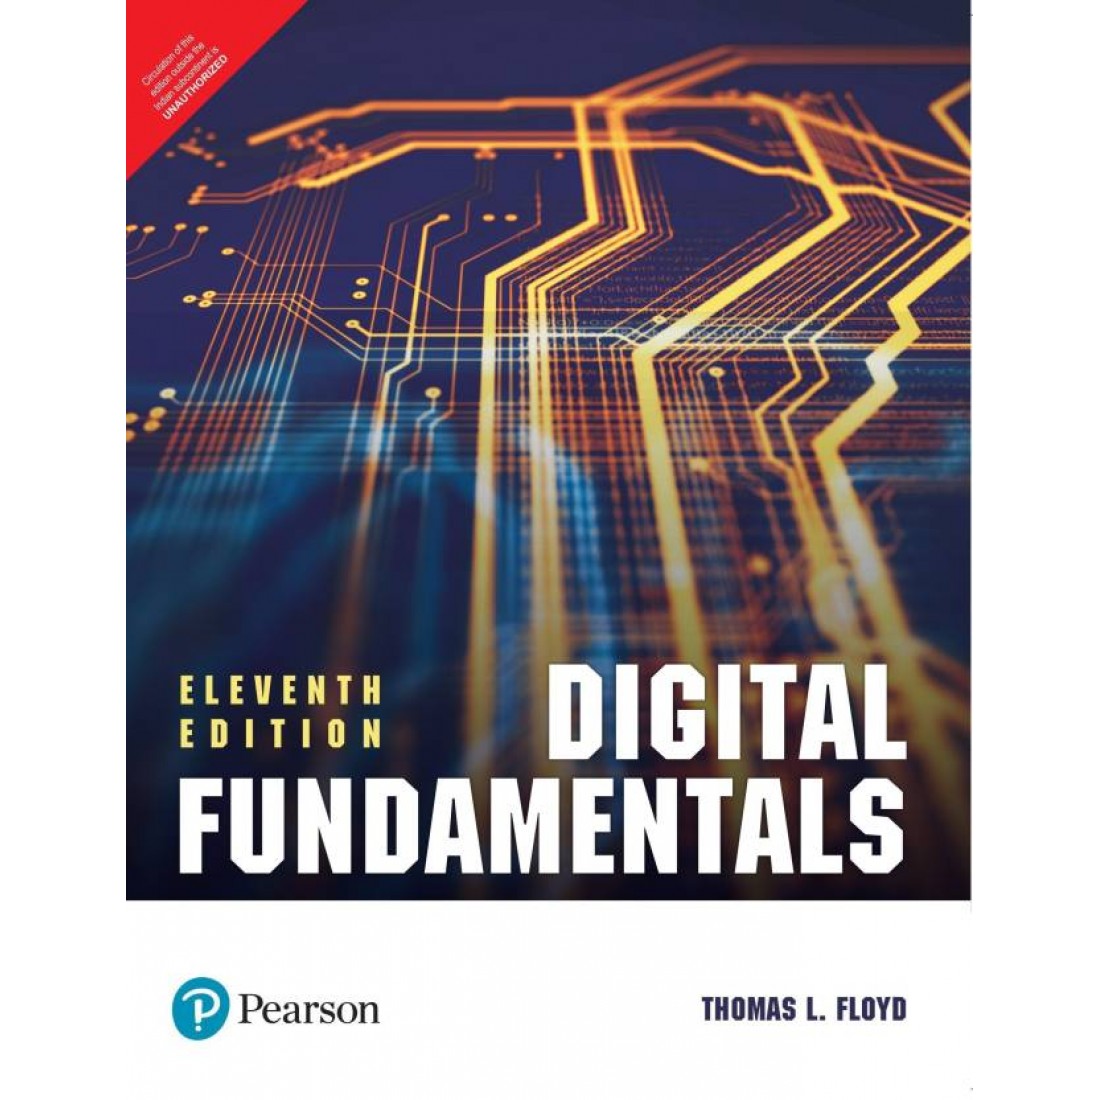 digital fundamentals 11th edition pdf free download